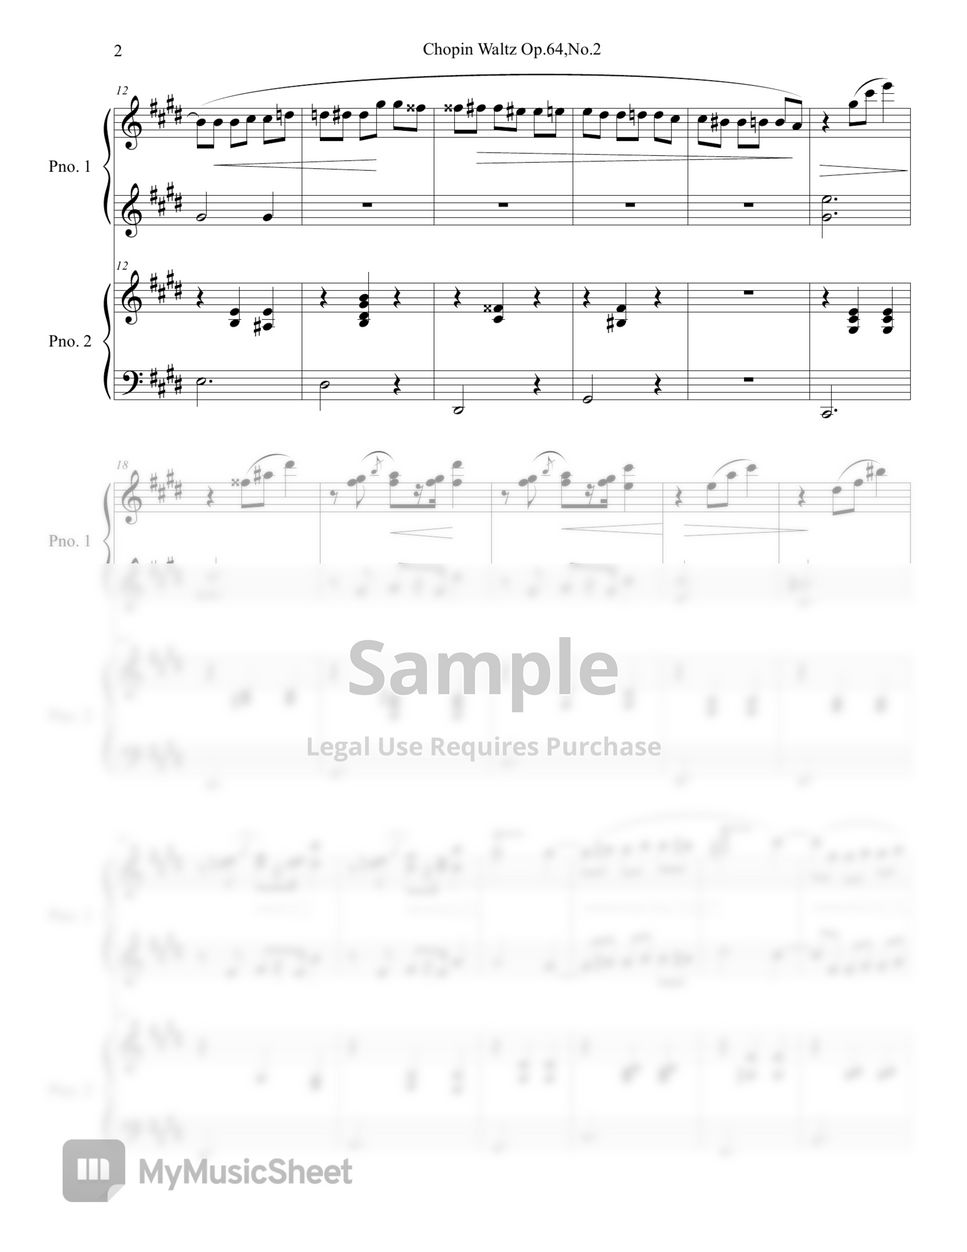 Chopin Waltz 4hands Sheets